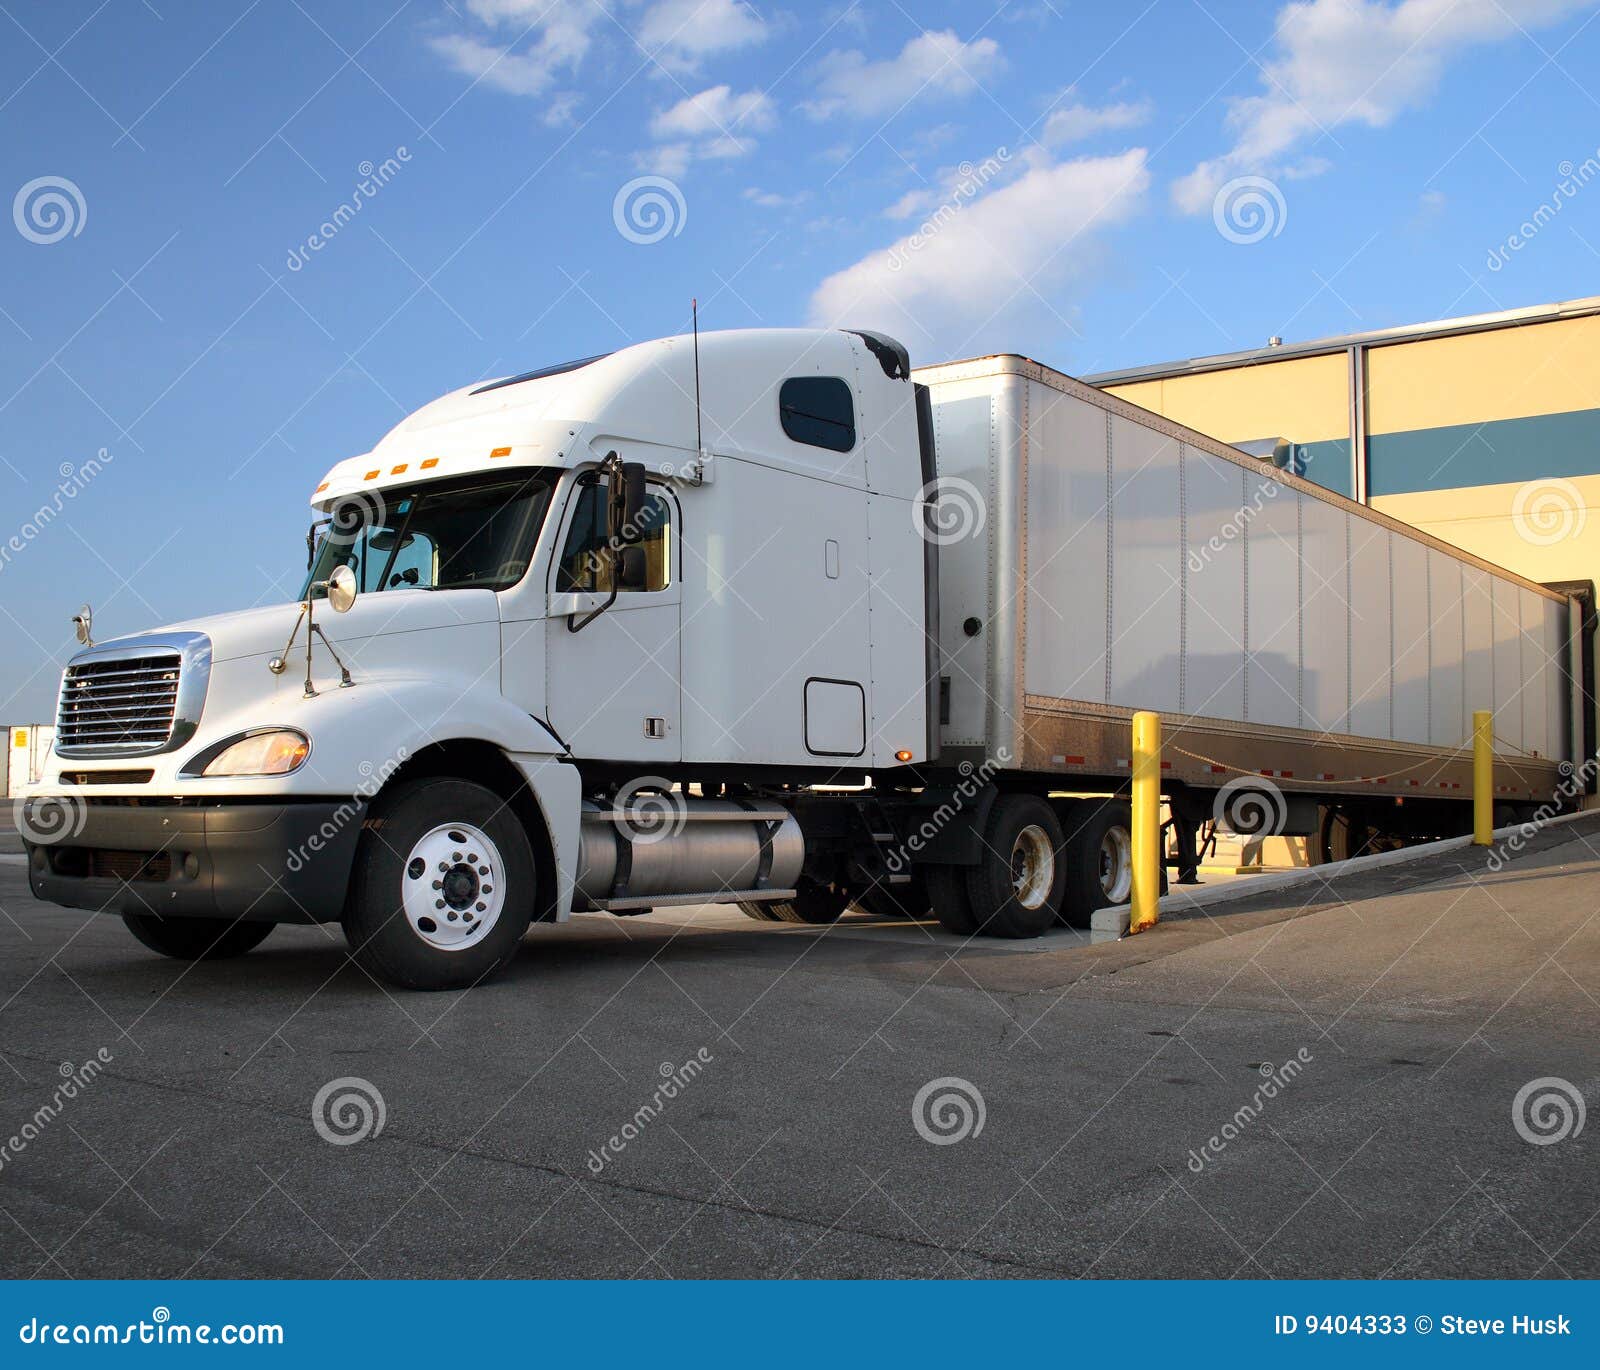 semi truck / tractor trailer at loading dock